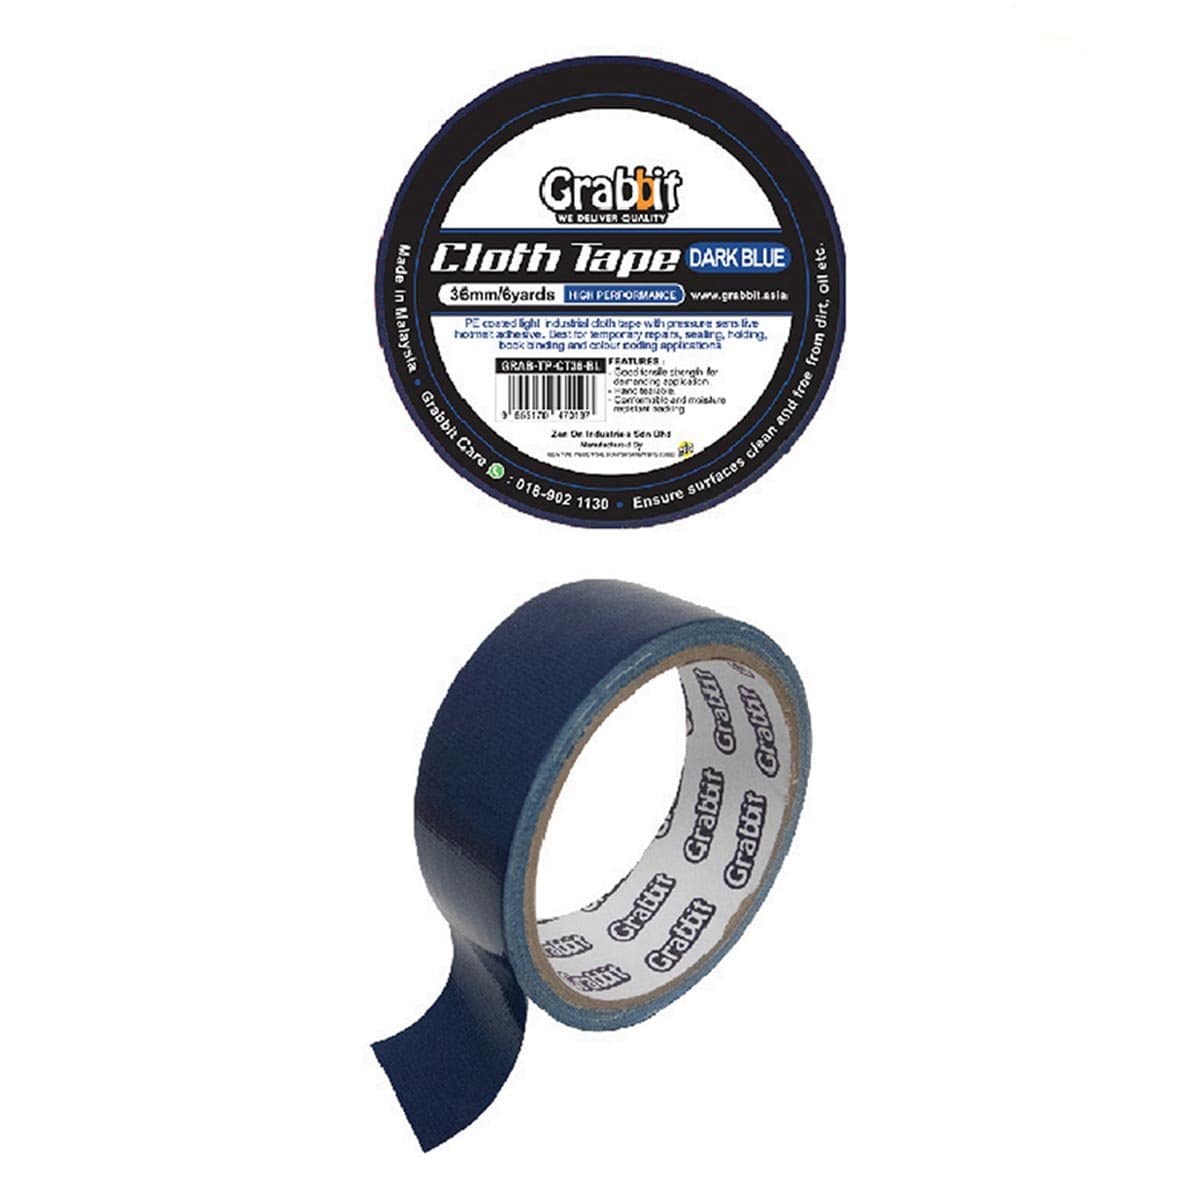 Grabbit Cloth Tape 36mm (Blue)